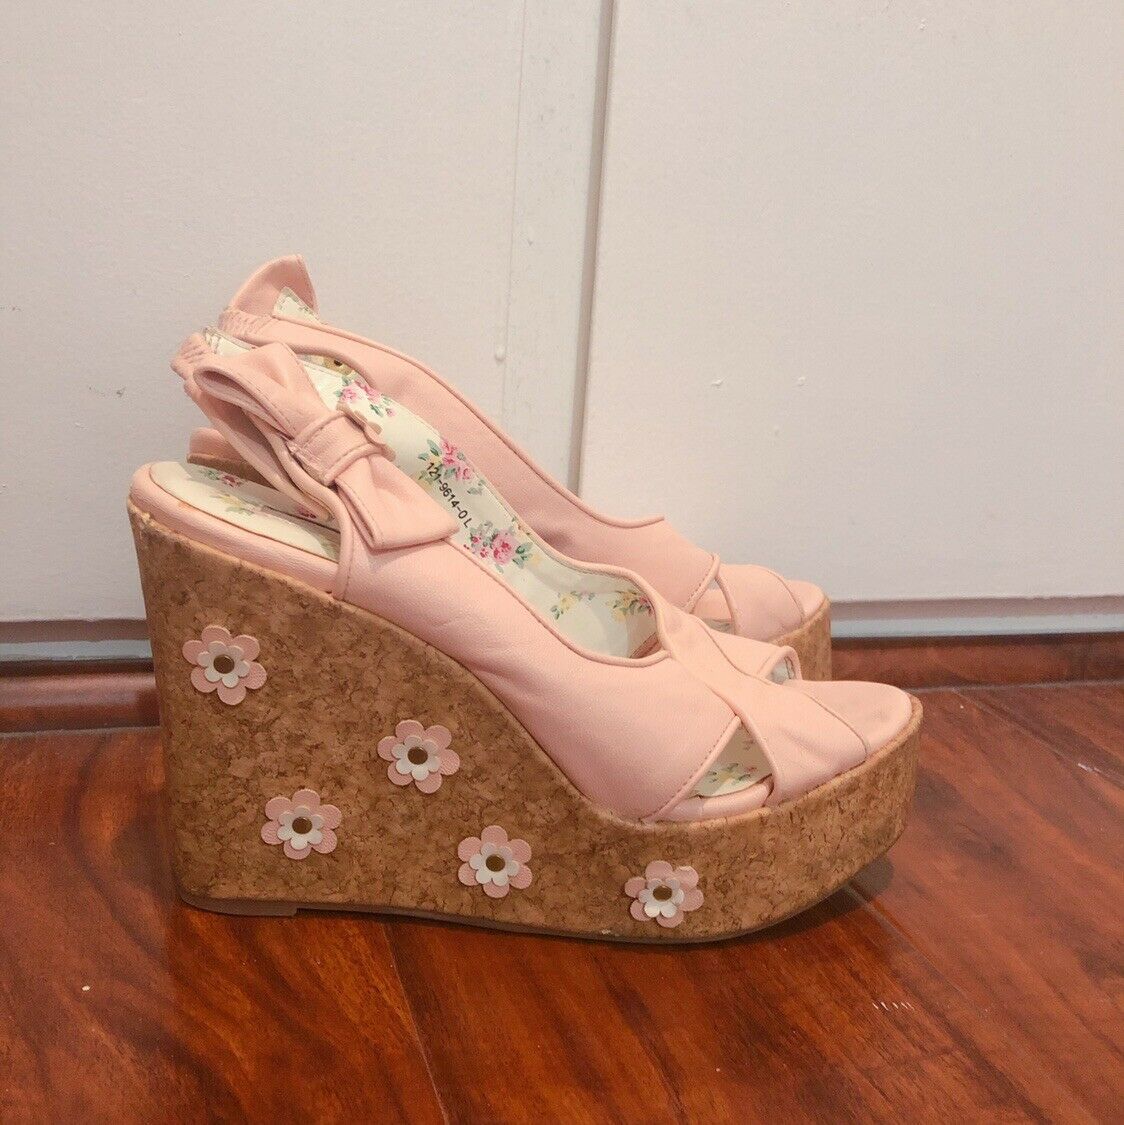 Japan Kawaii Liz Lisa Pink Floral Heels Shoes